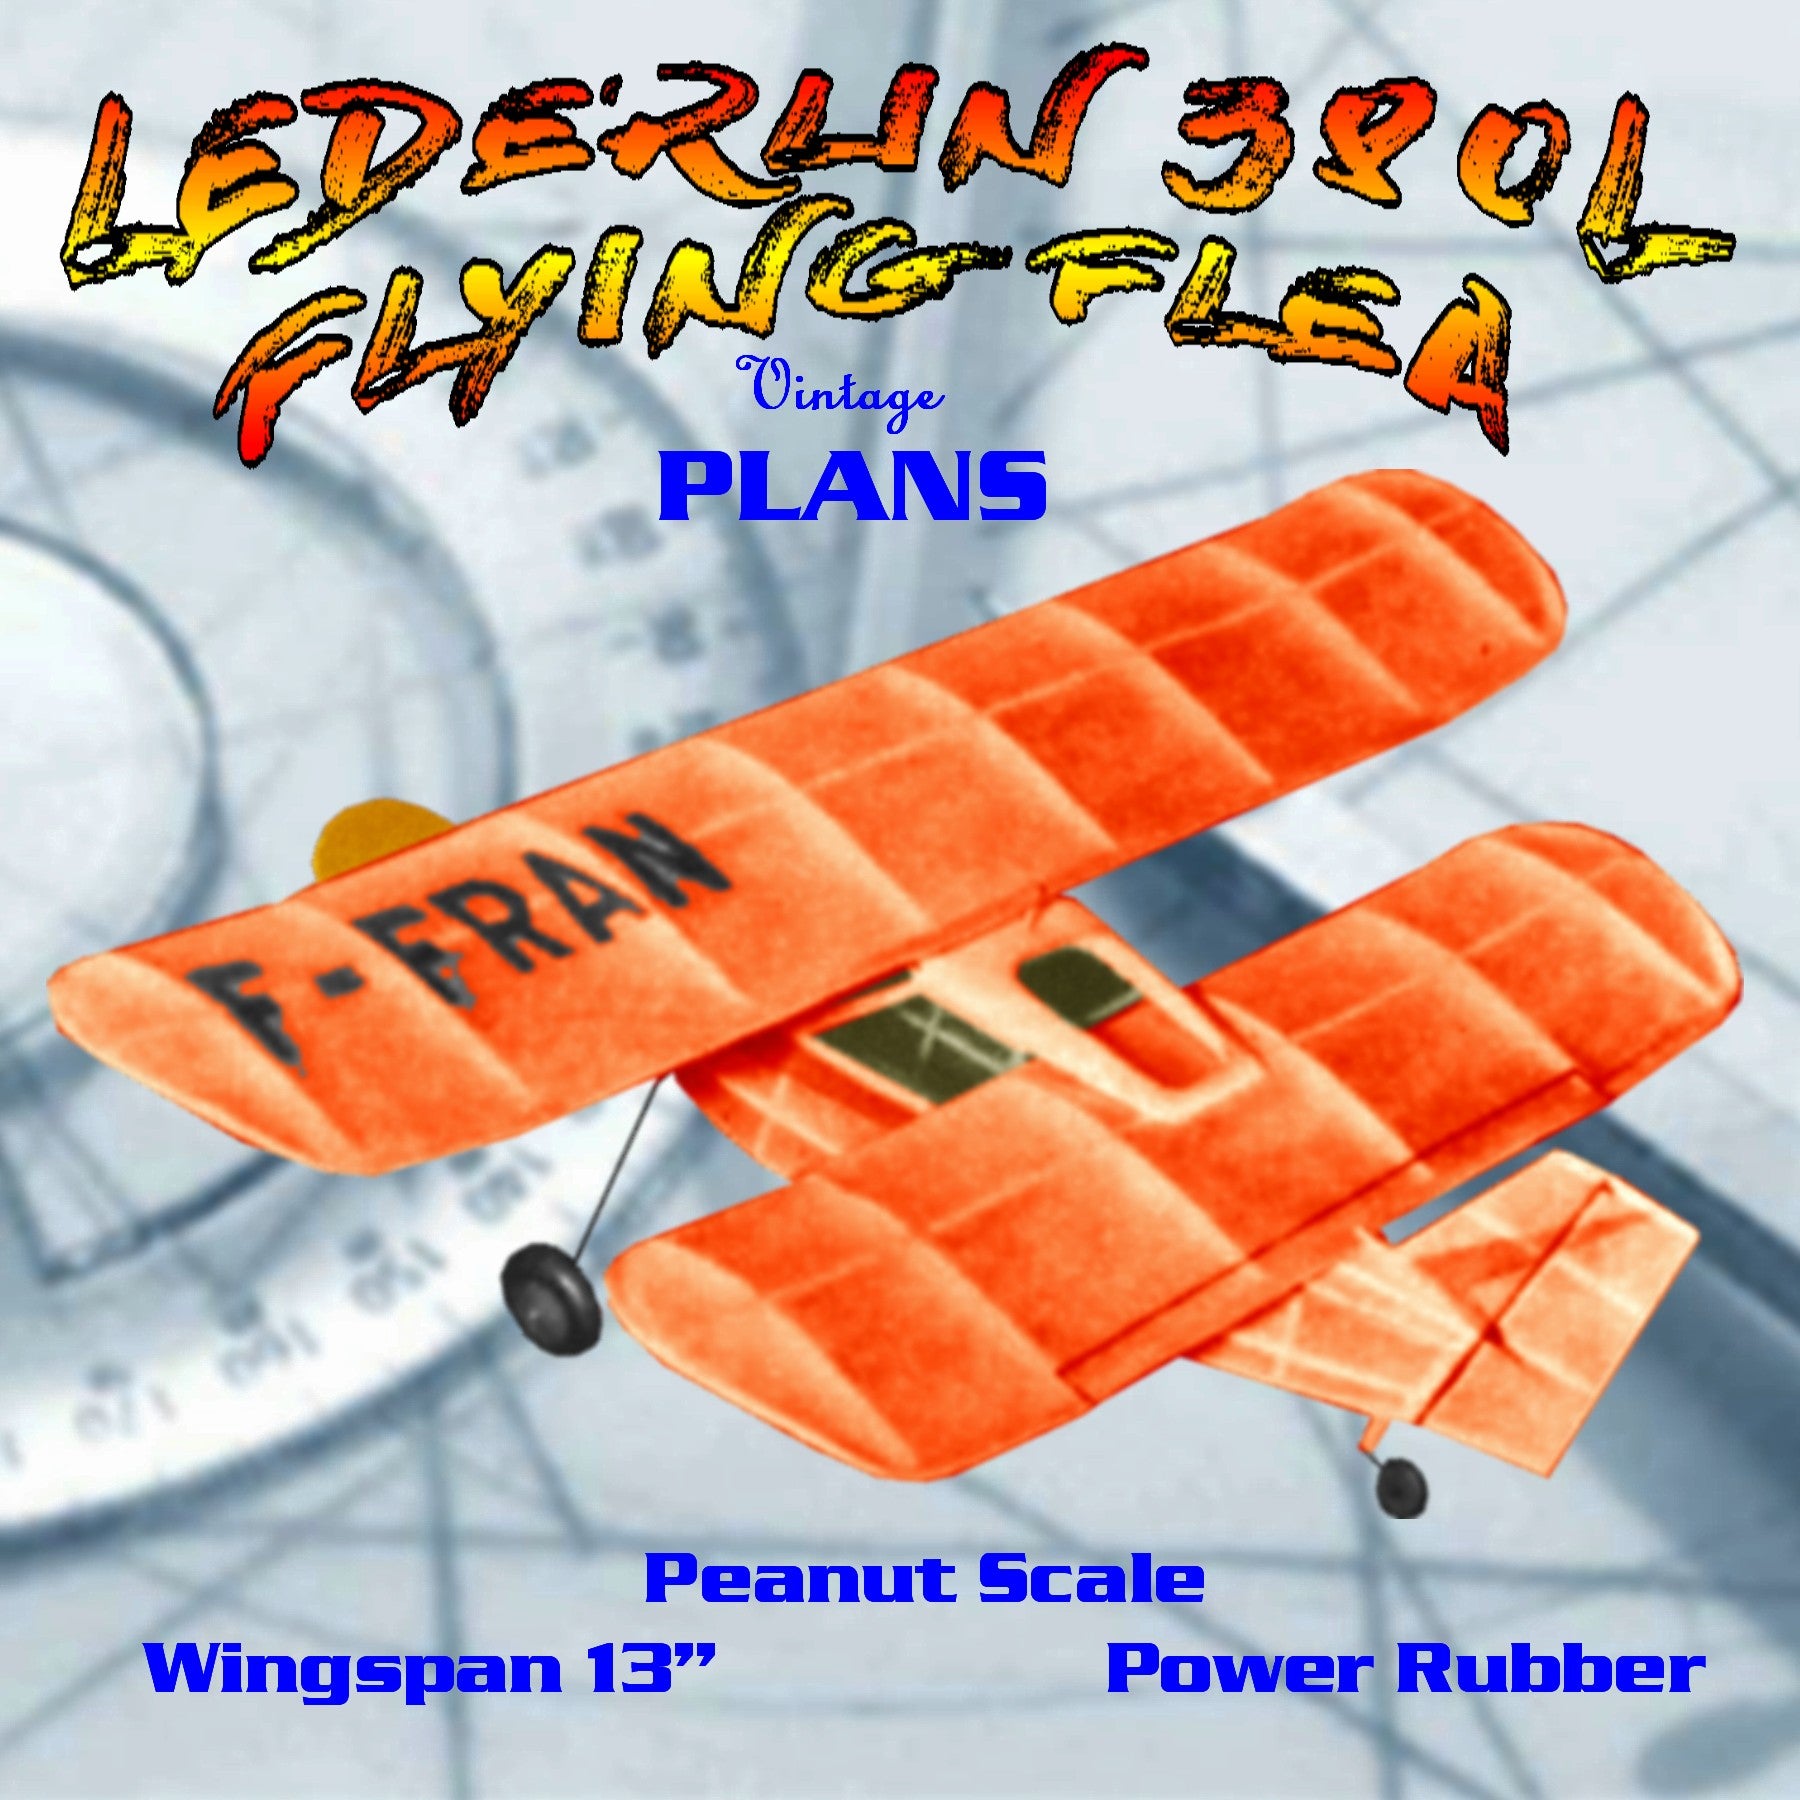 full size printed plans peanut scale "lederlin 380l flying flea" the "flea" is hard to beat